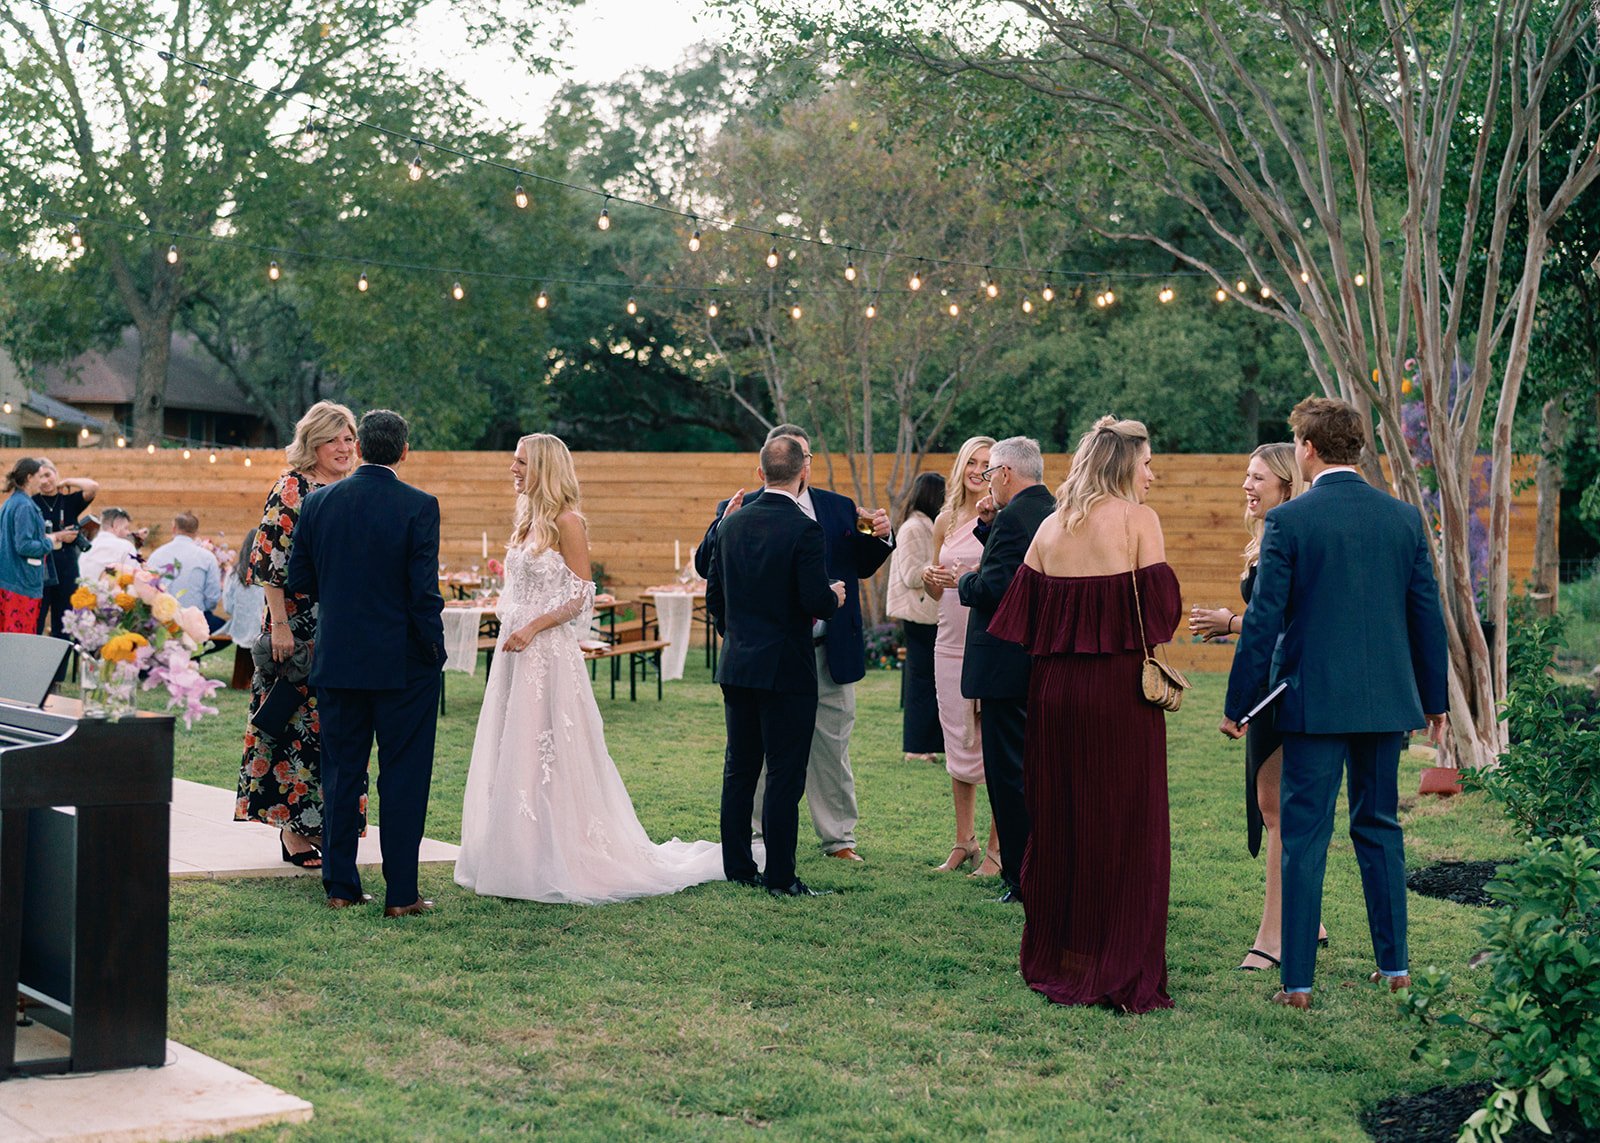 Best-Austin-Wedding-Photographers-Elopement-Film-35mm-Asheville-Santa-Barbara-Backyard-145.jpg